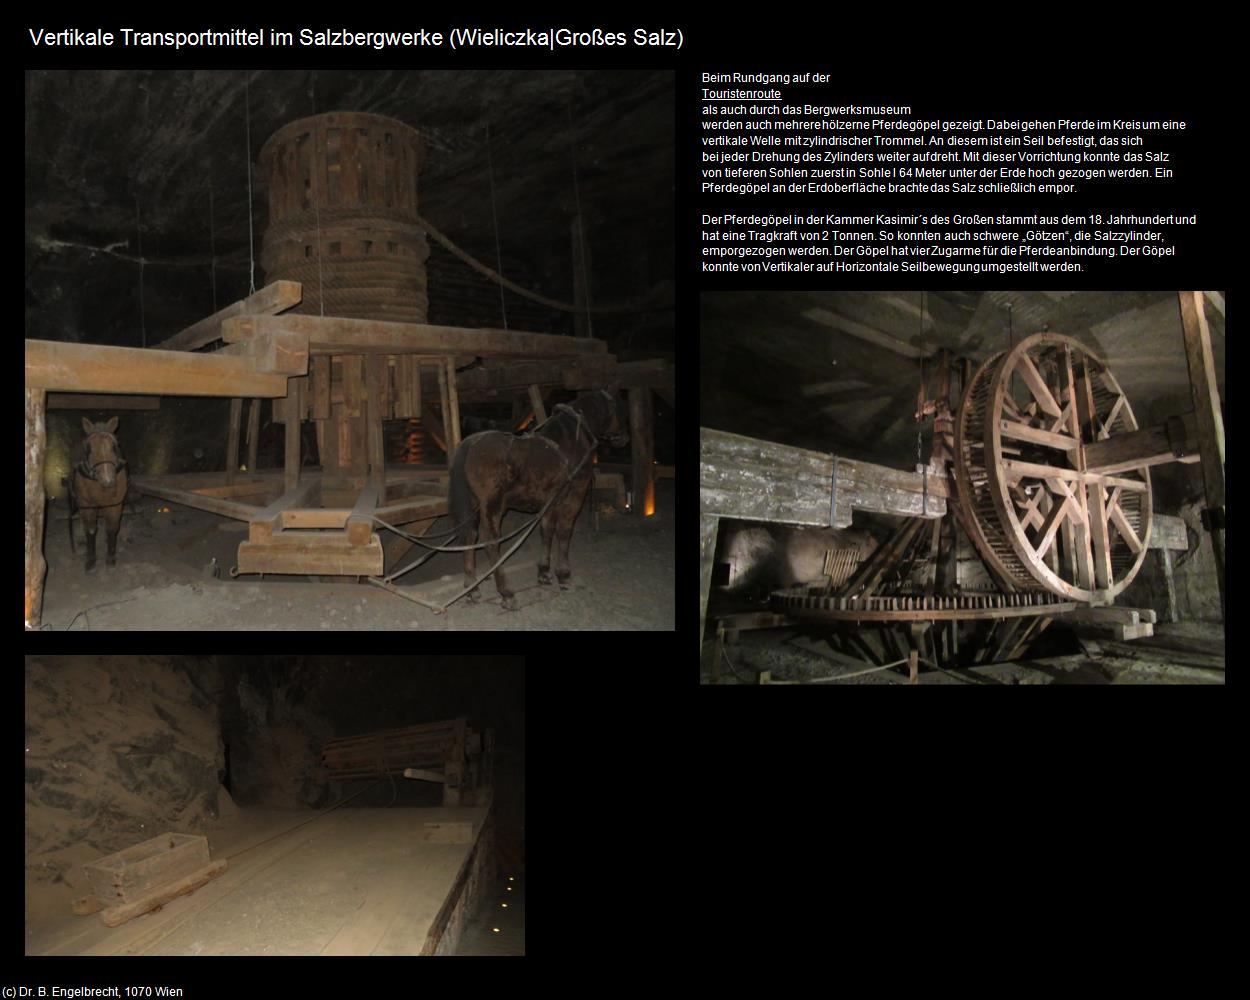 Vertikale Transportmittel im Salzbergwerke  (Wieliczka|Großes Salz) in POLEN-Galizien(c)B.Engelbrecht